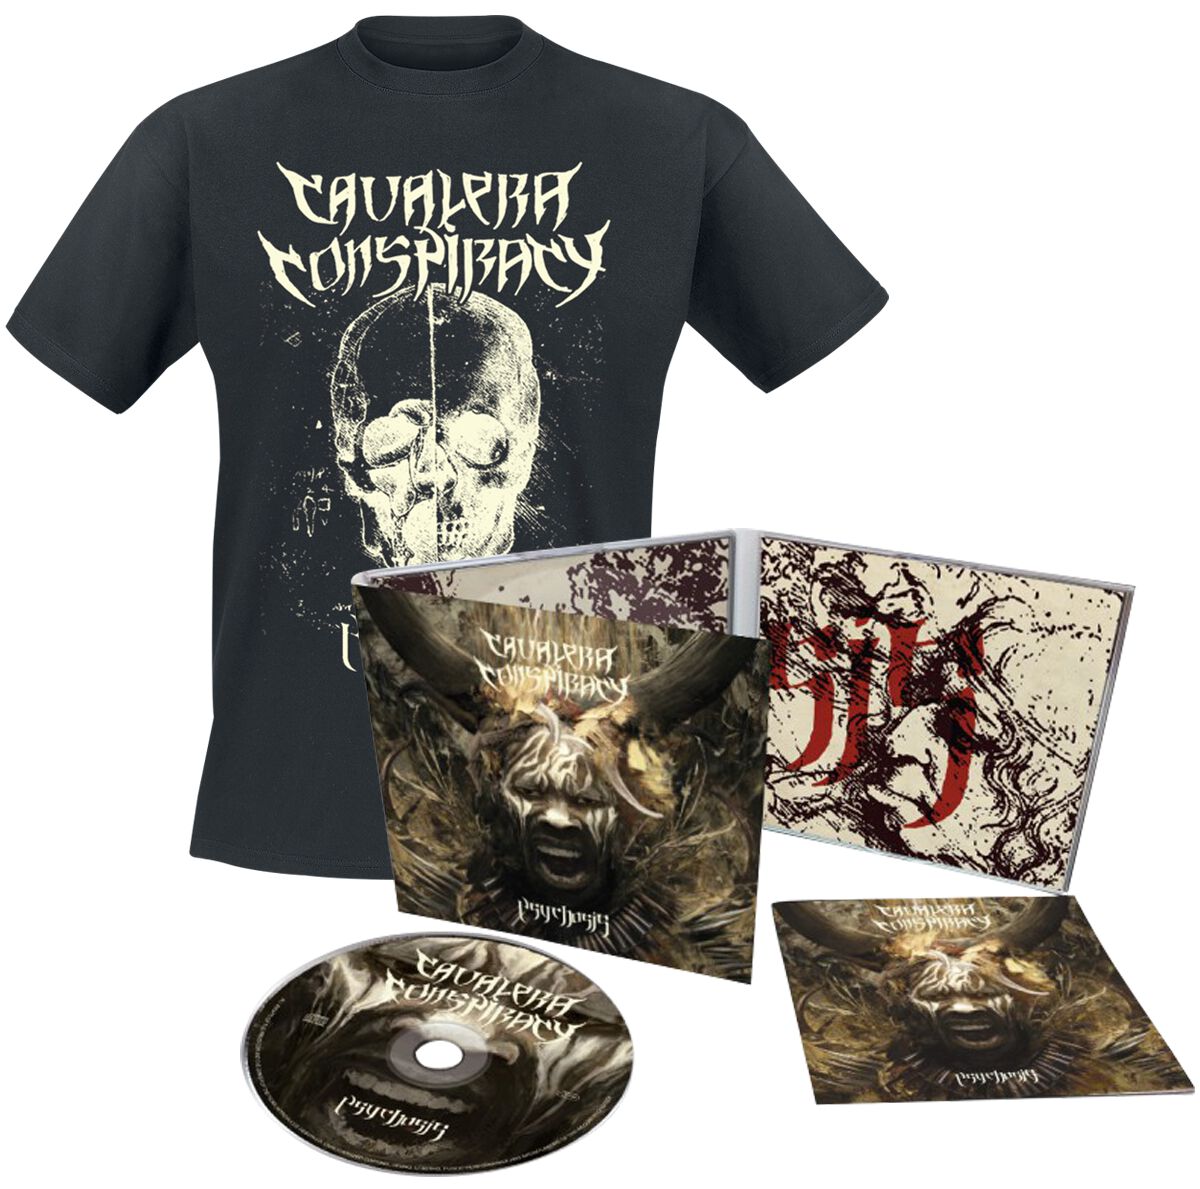 CAVALERA CONSPIRACY-Psychosis/Limited Edition Digipak CD + T-Shirt Bundle